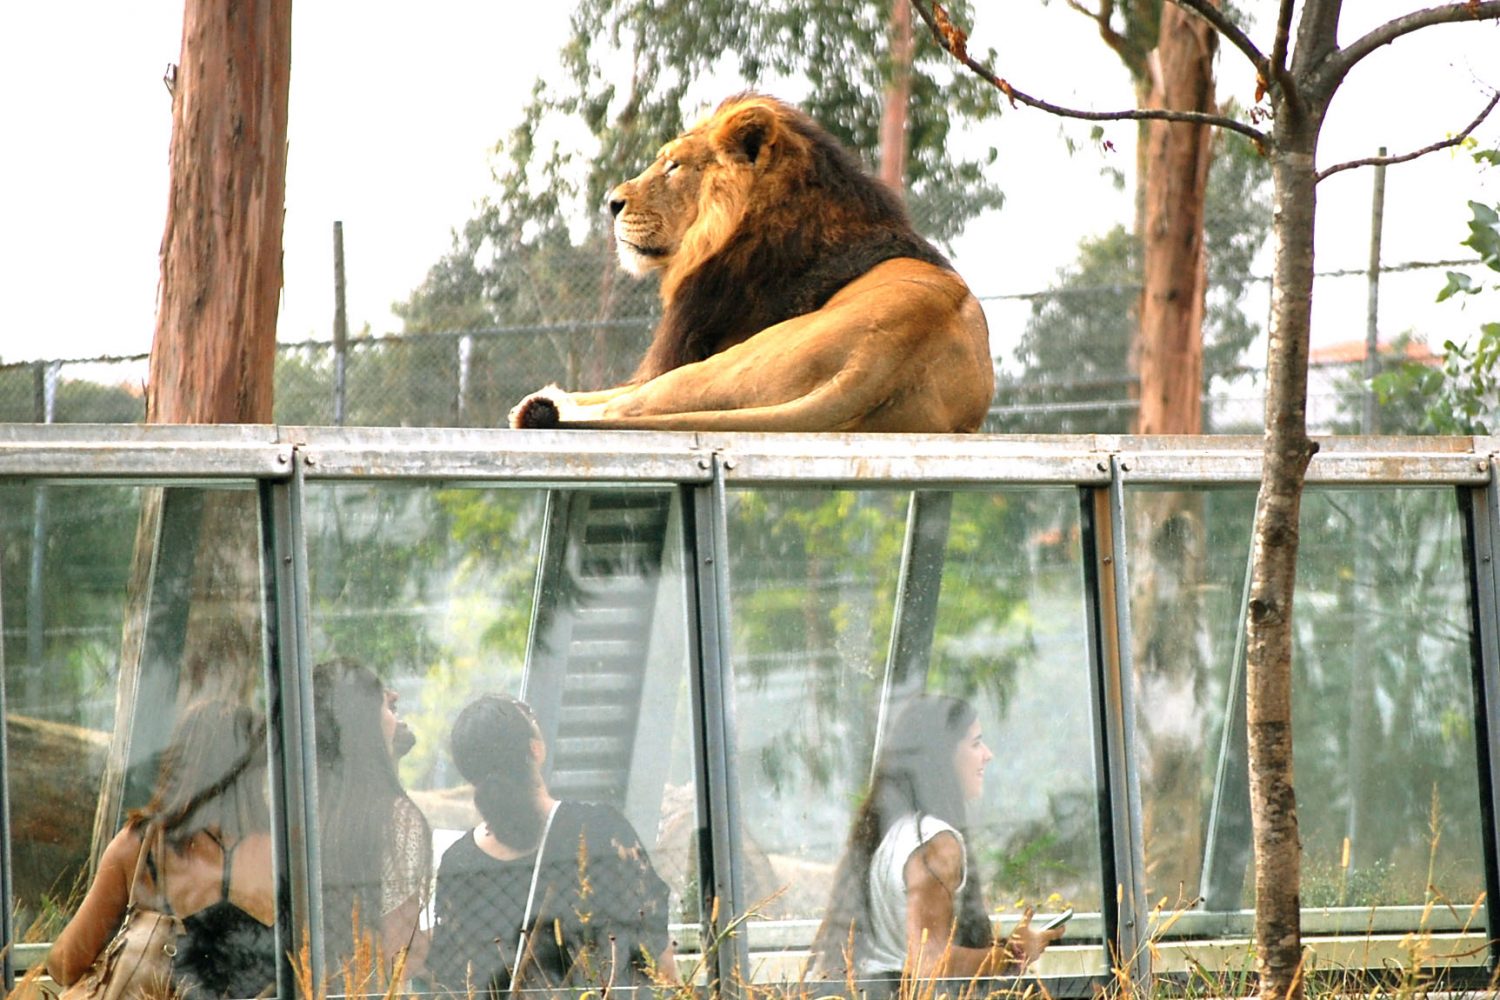 People admiring the lion resting at Zoo santo inacio Porto